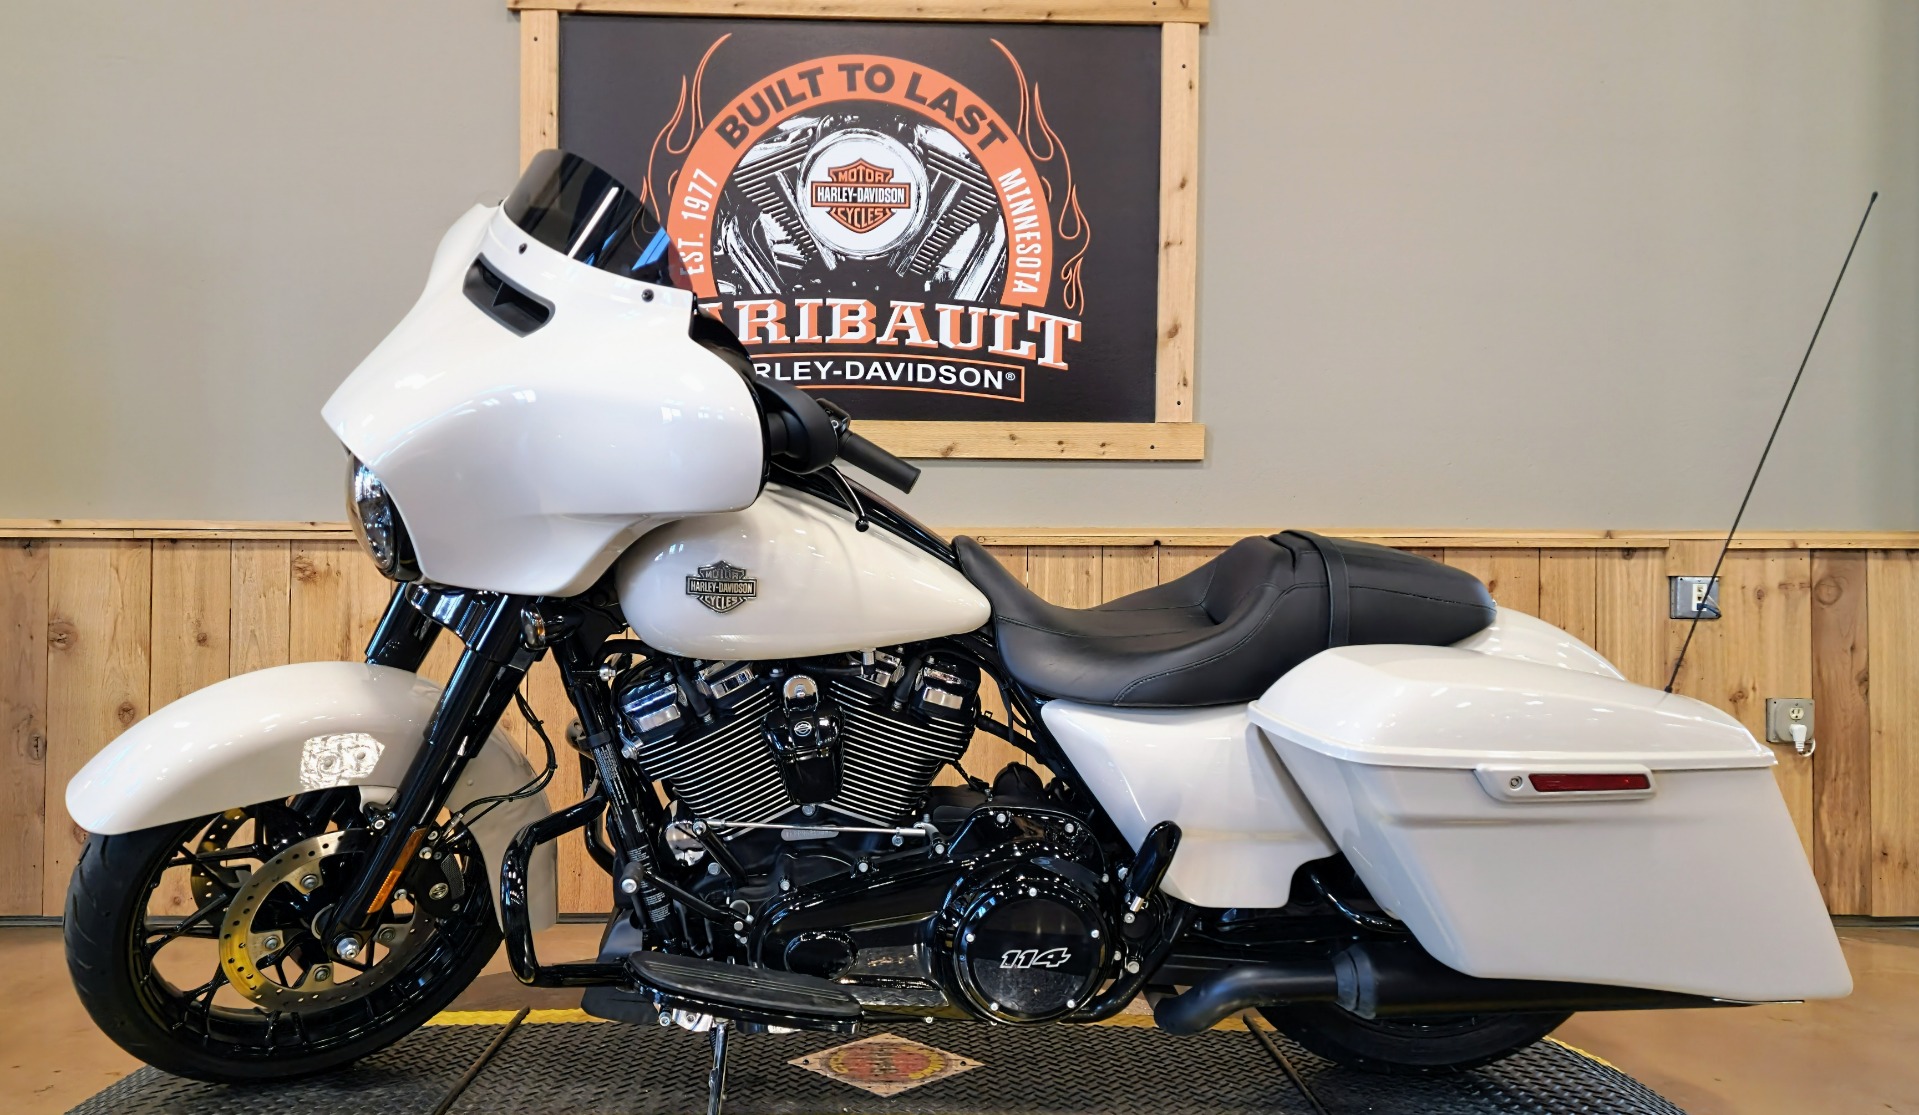 2022 Harley-Davidson Street Glide® Special in Faribault, Minnesota - Photo 5